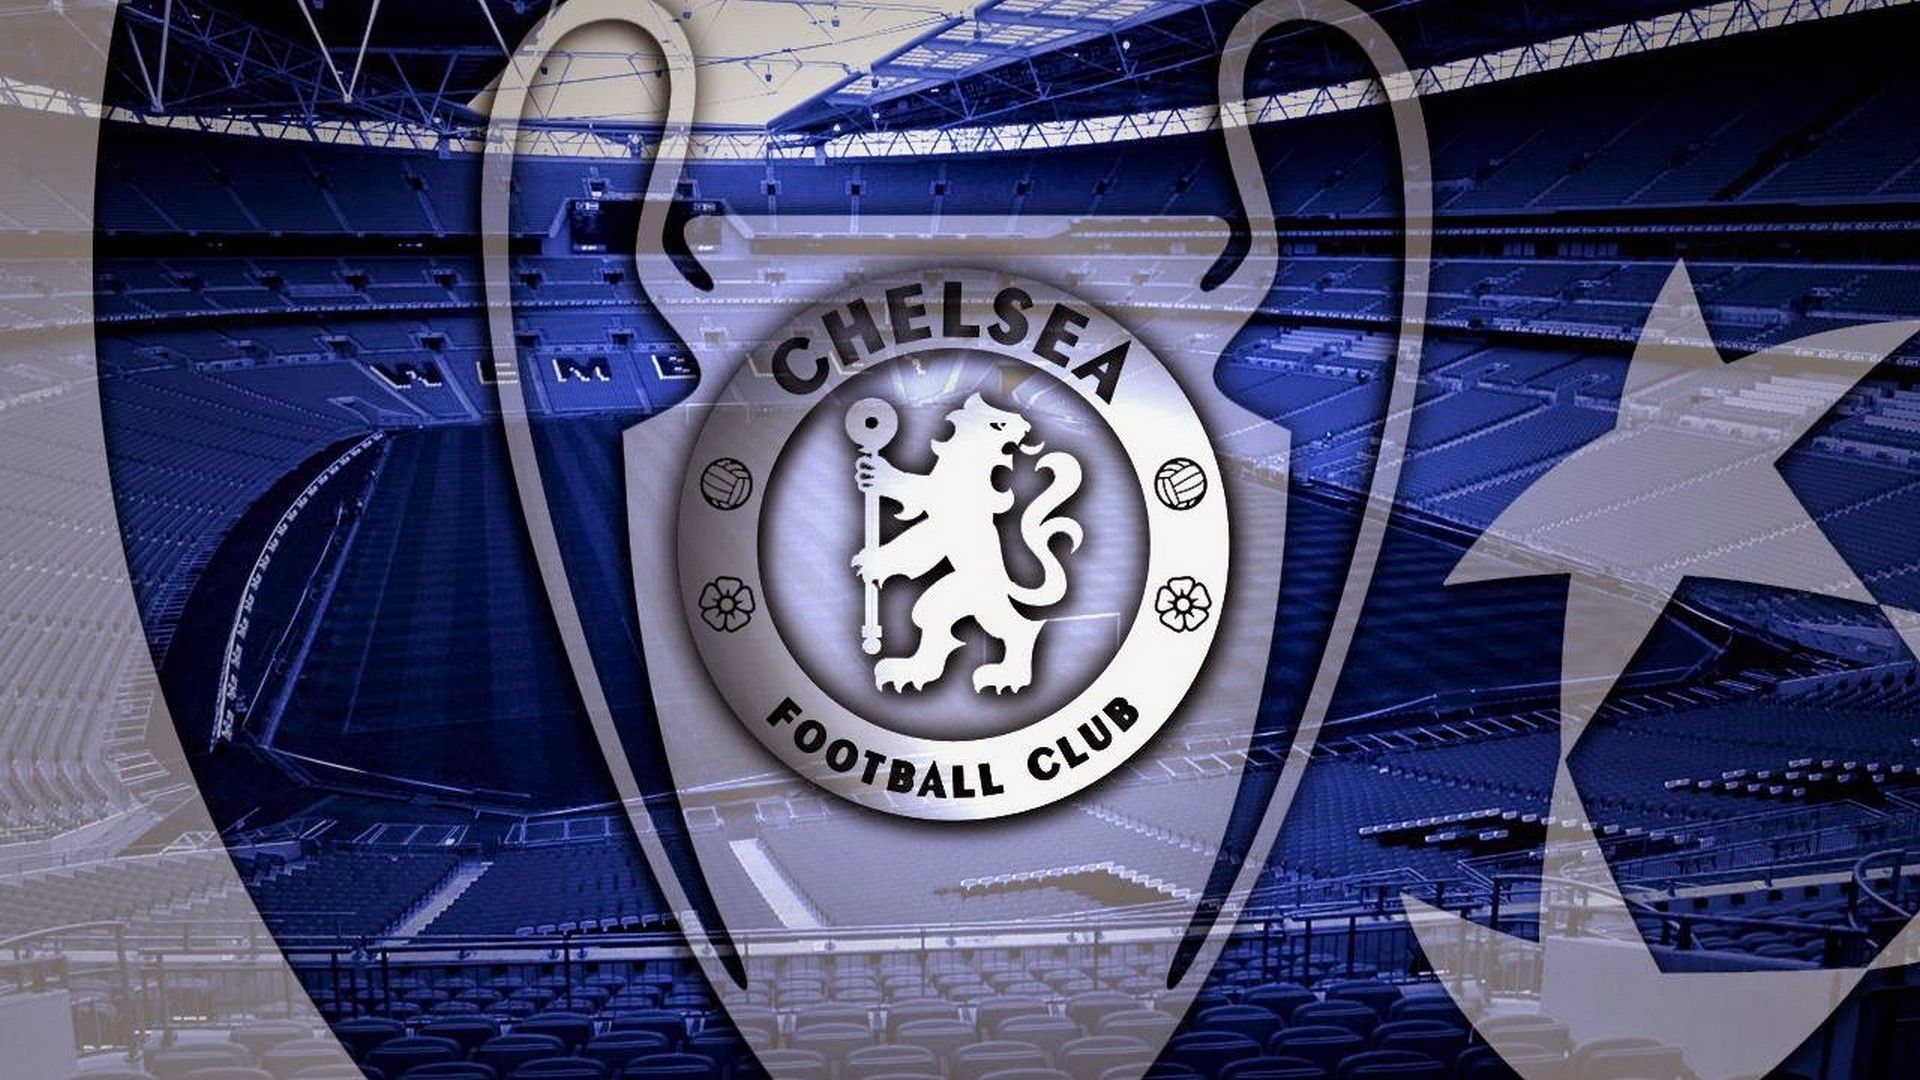 Chelsea Champions League Wallpaper Football Wallpaper. Chelsea football, Chelsea football club, Chelsea football club wallpaper